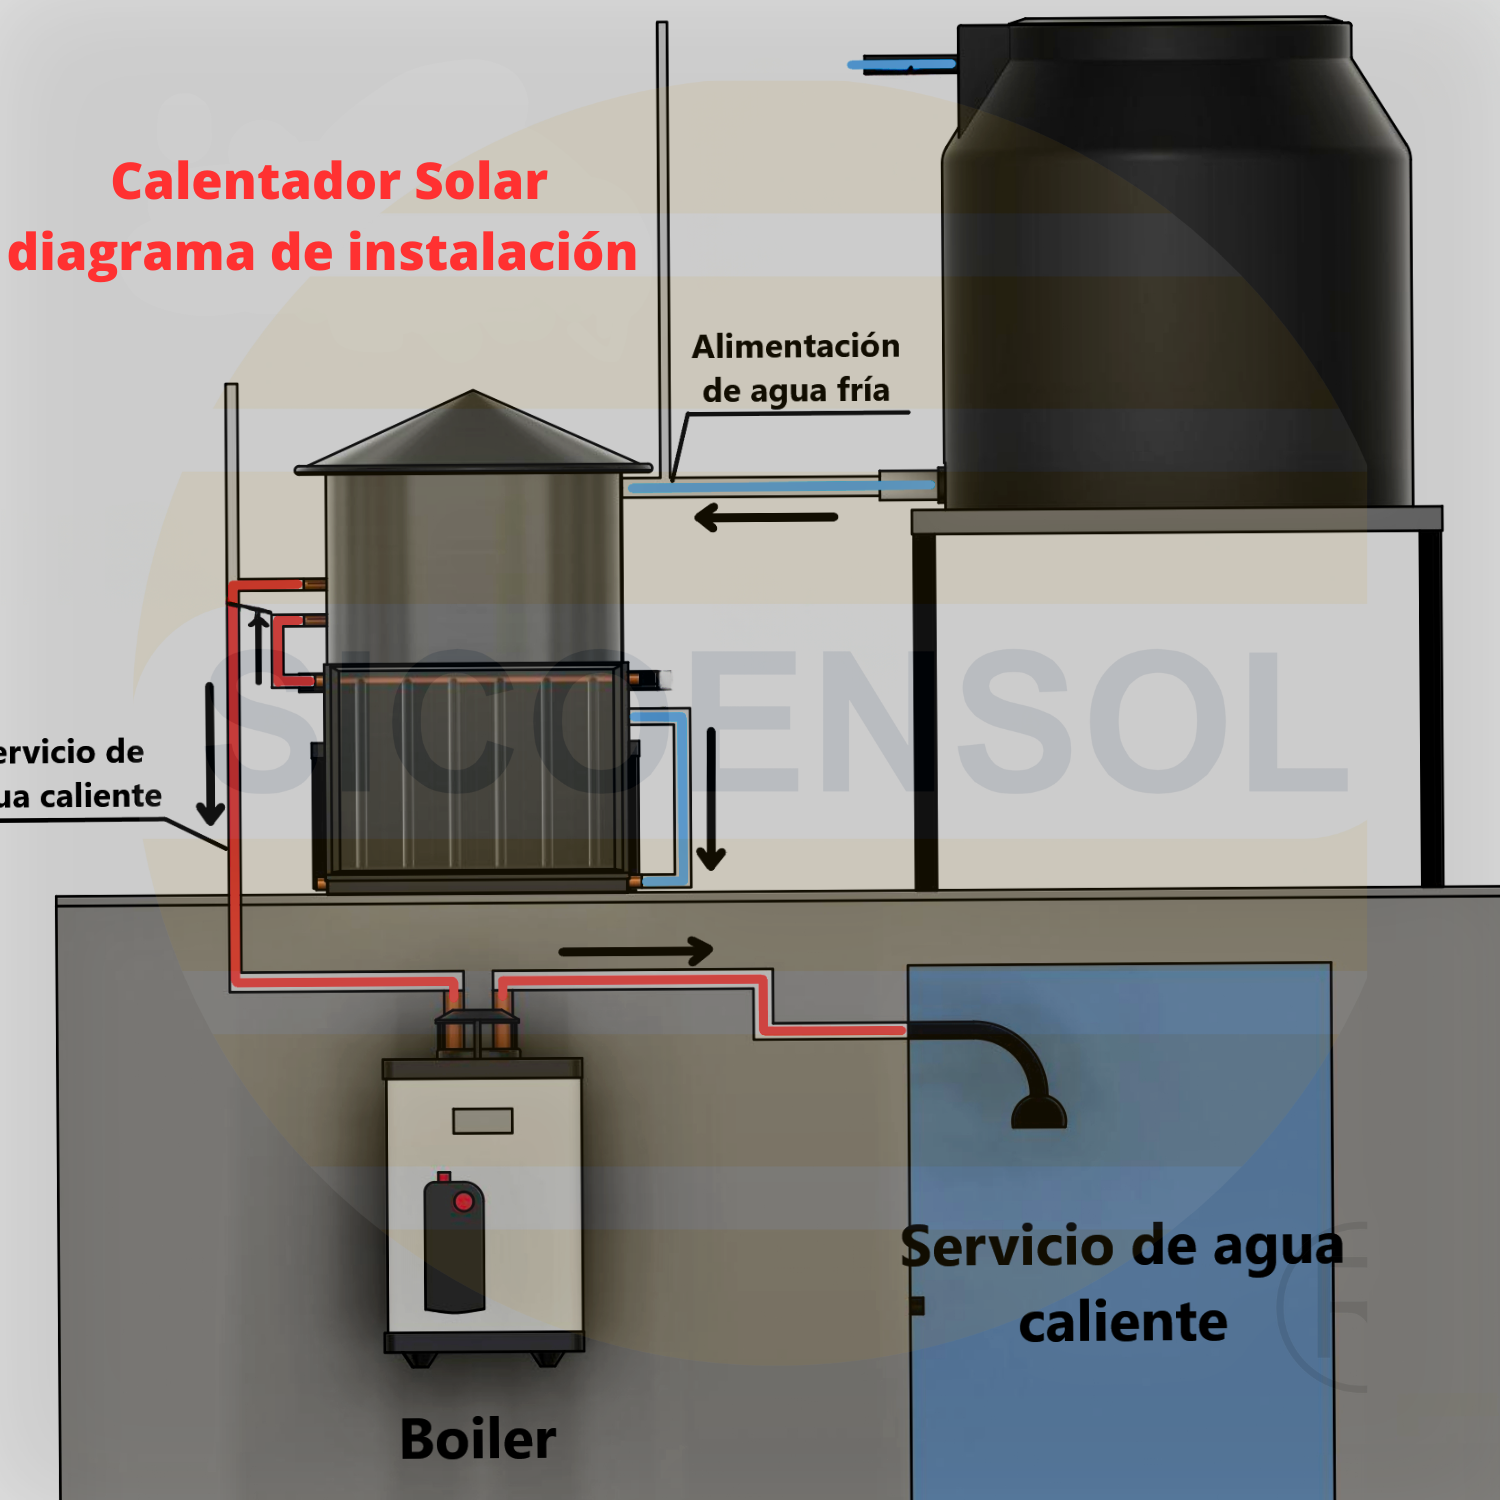 Calentador solar diagrama de instalacion (1500 × 1500 px) FINAL PW